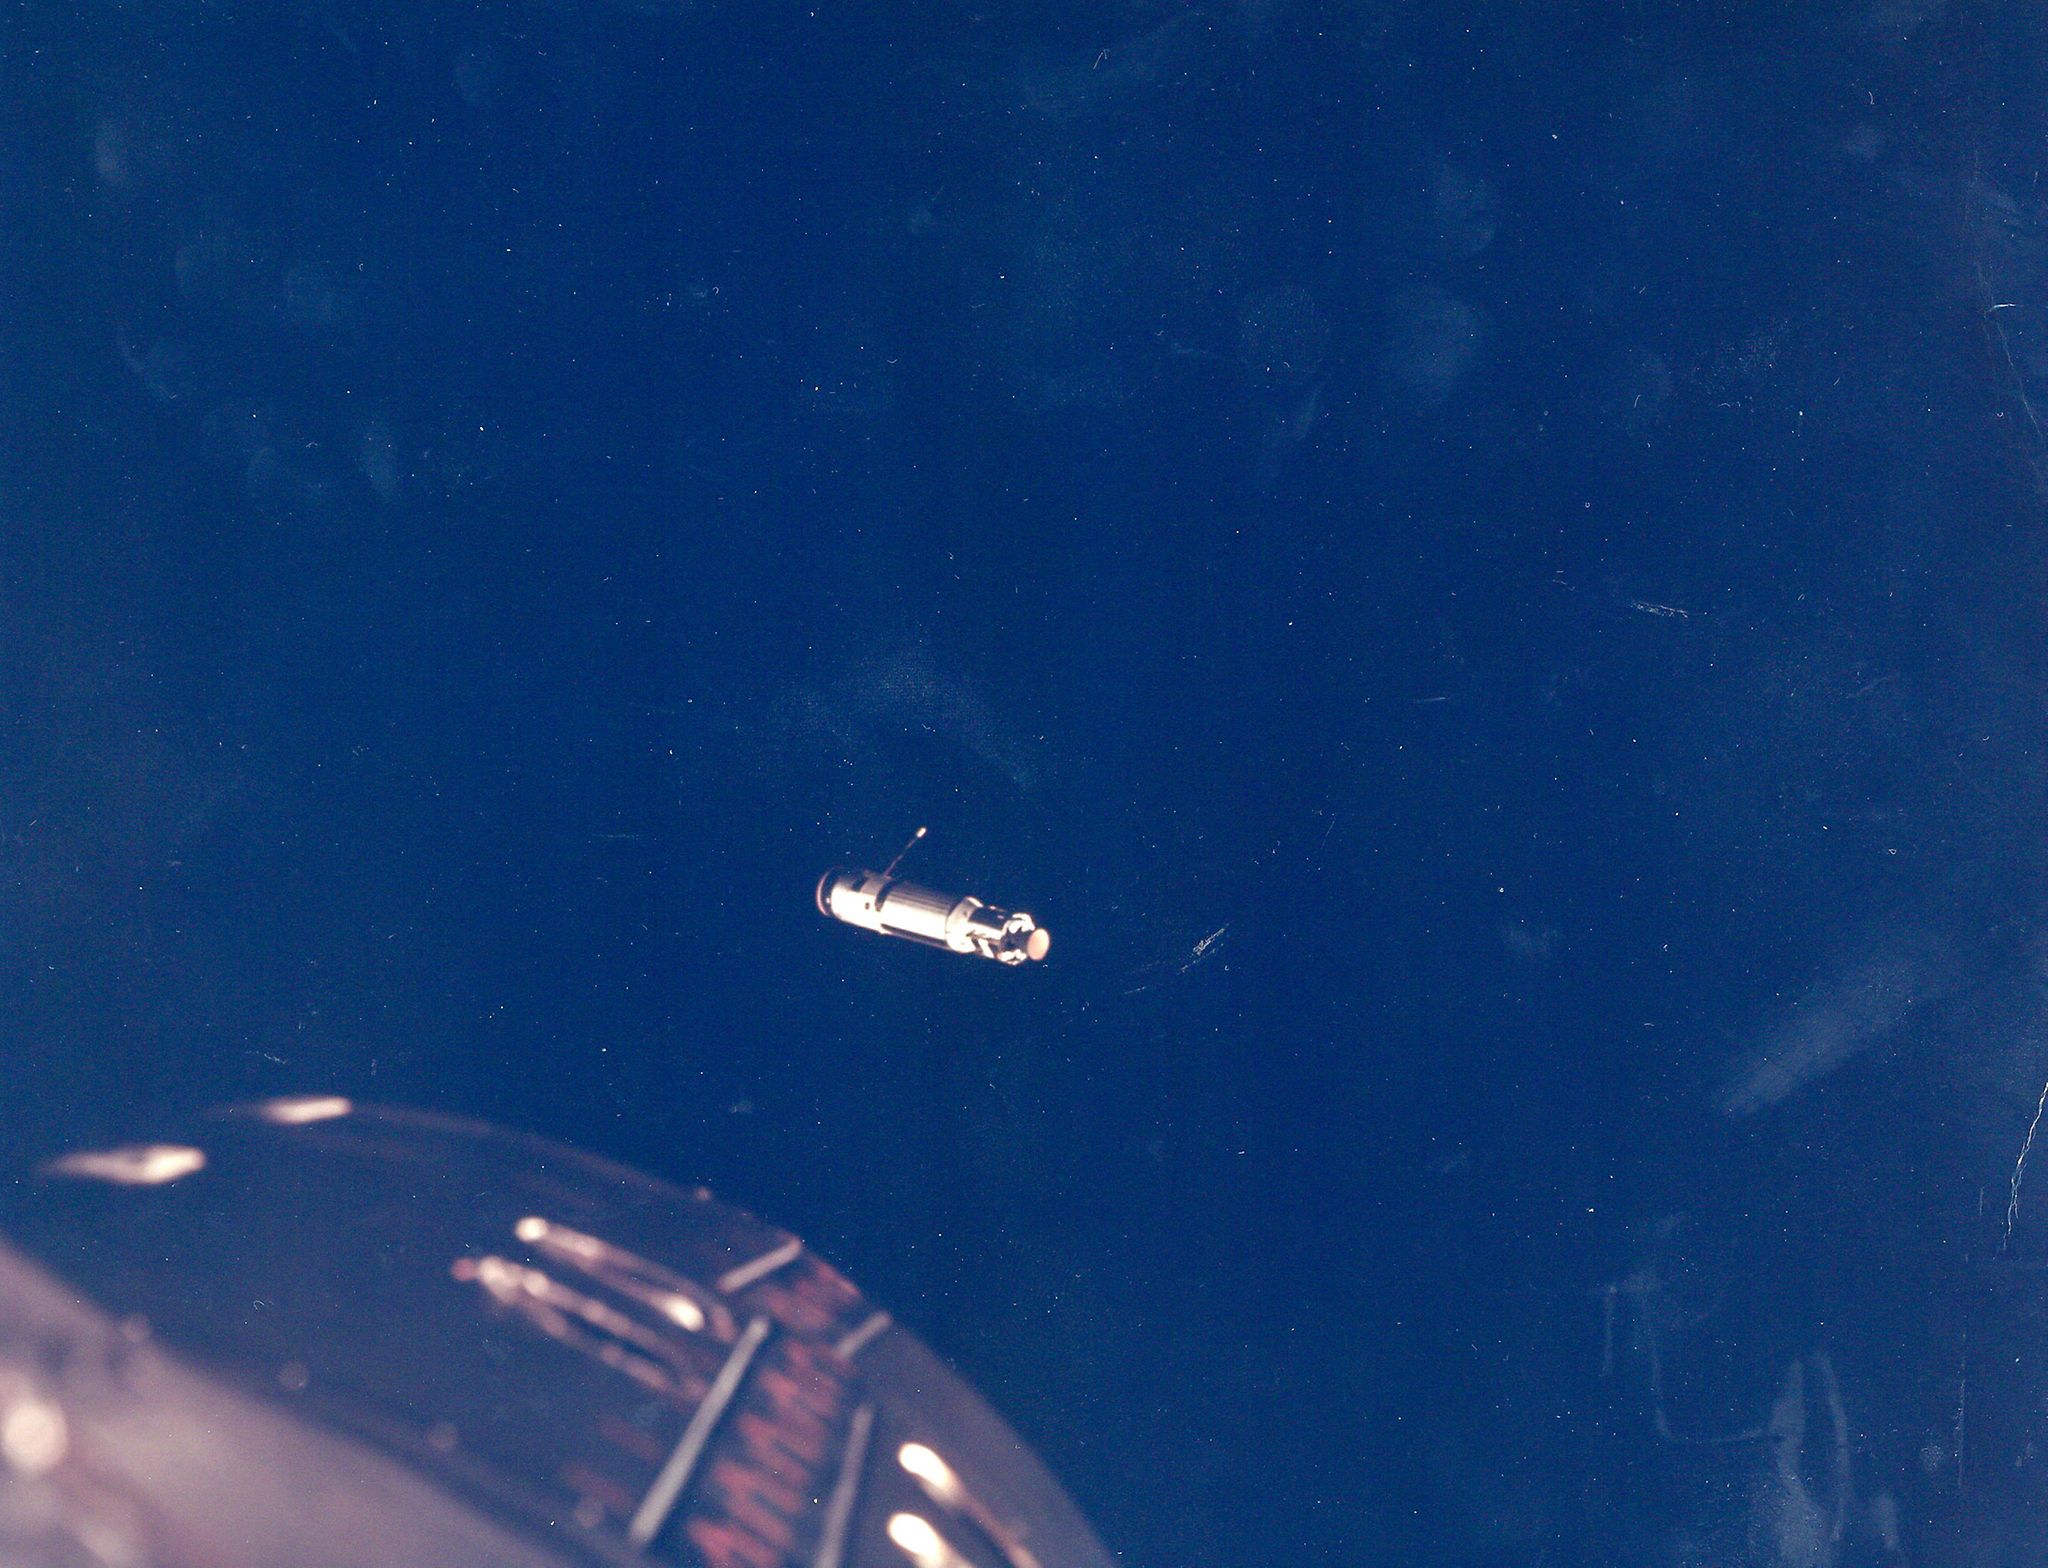 David Scott - First docking of two spacecraft, Gemini 8, March 1966 Three vintage chromogenic prints - Image 2 of 3